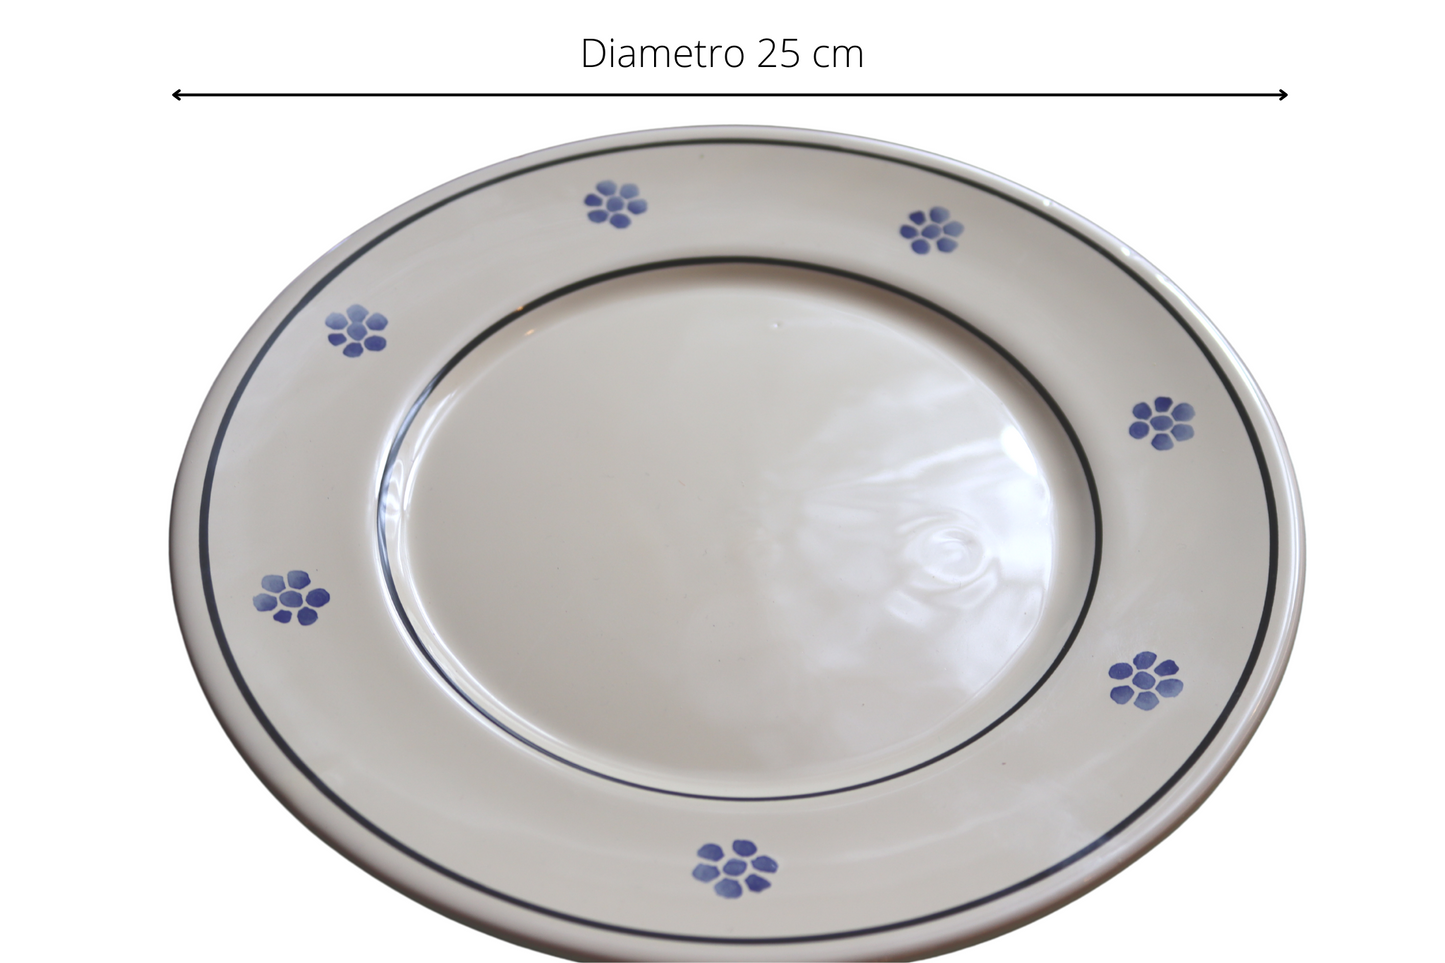 piatti in ceramica tipici